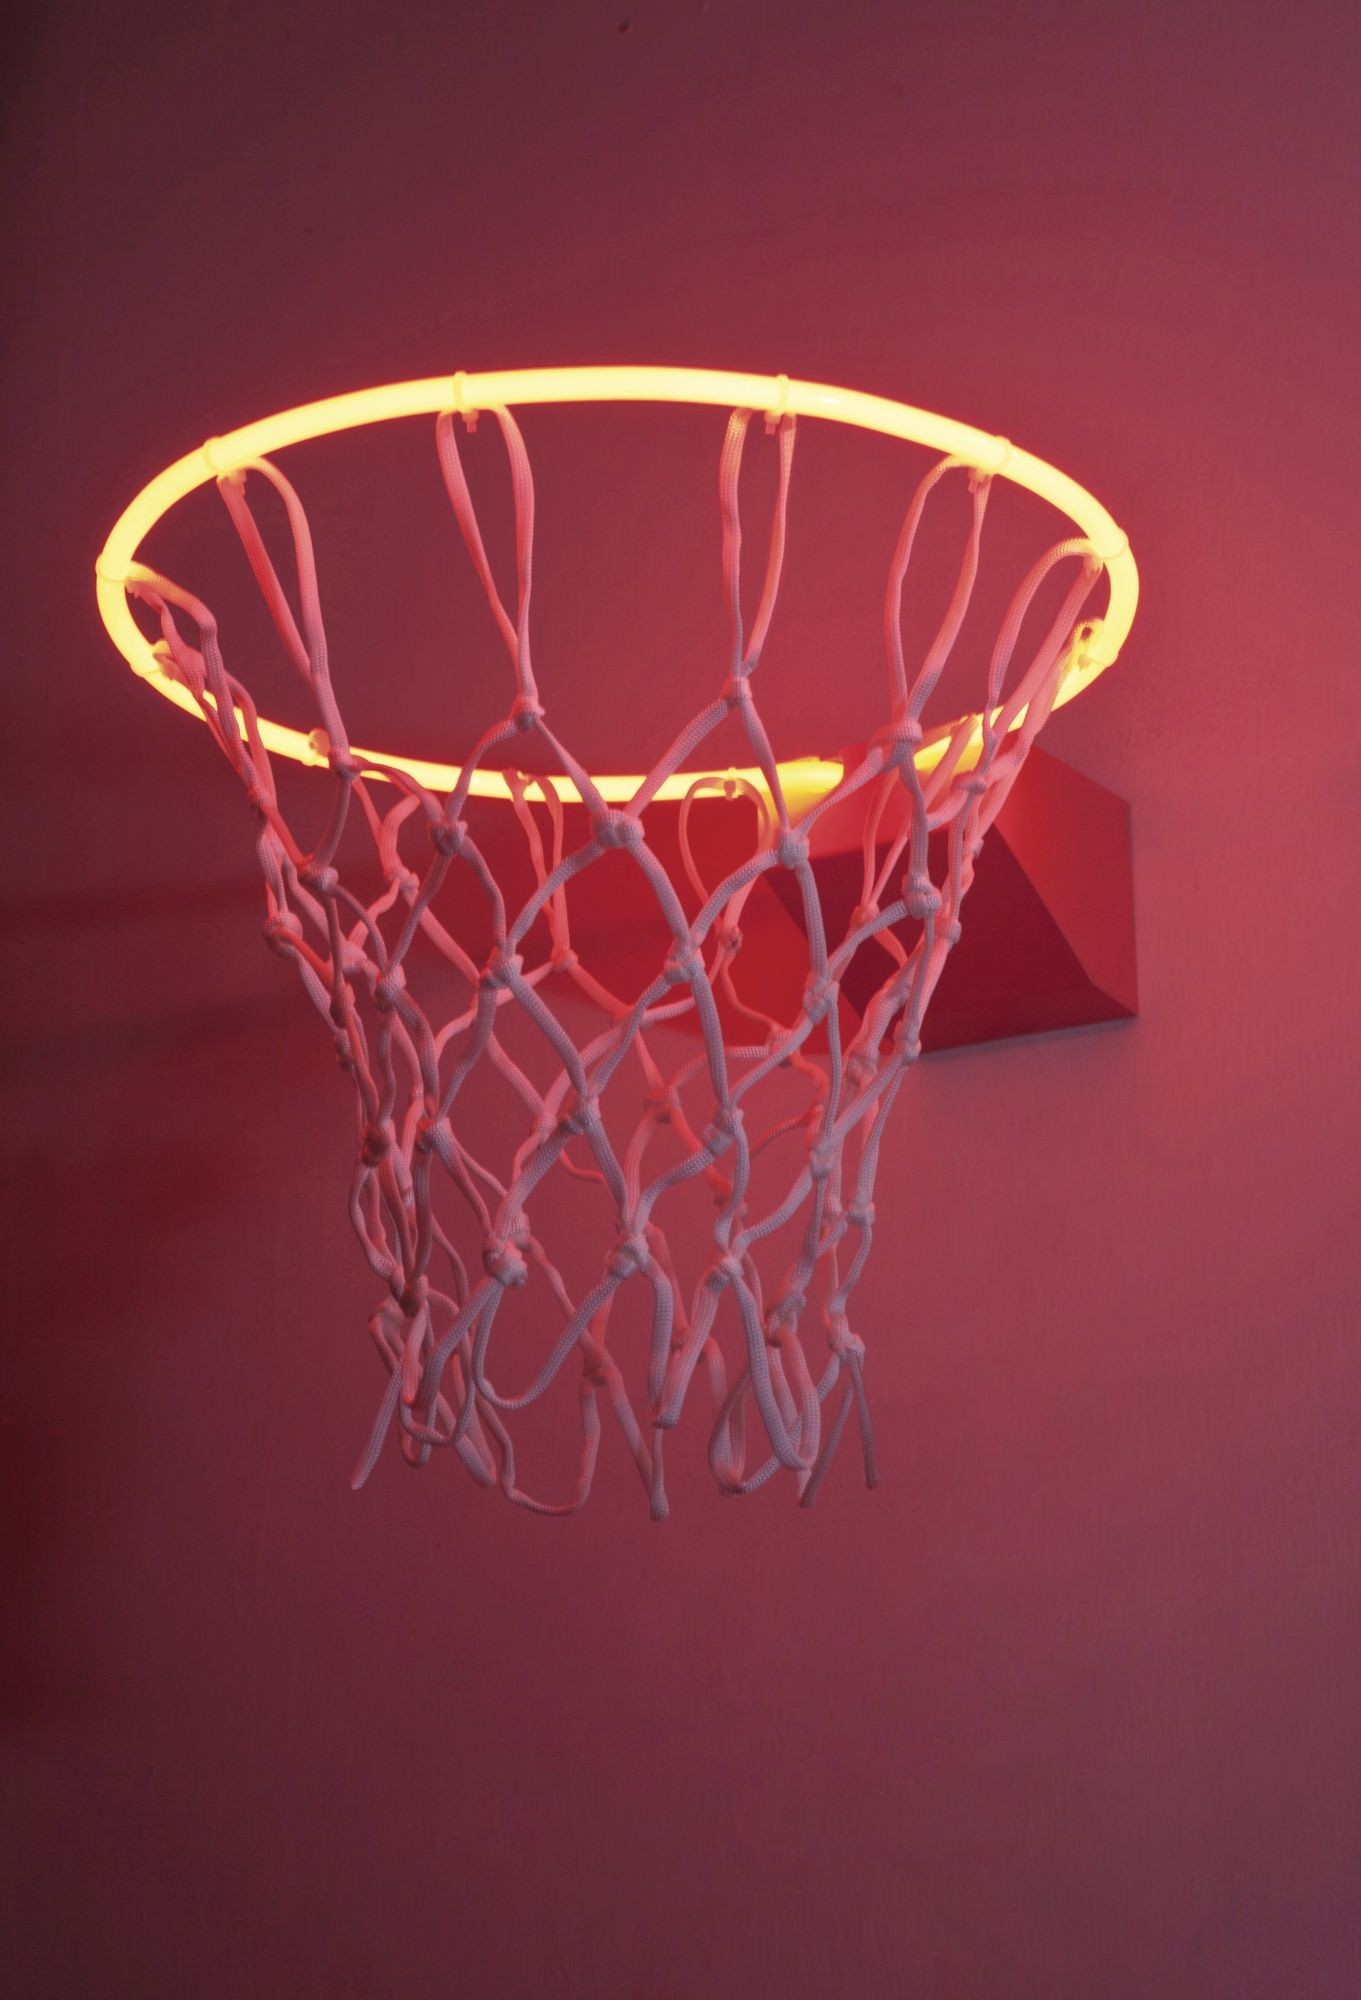 Aesthetic Basketball Wallpapers